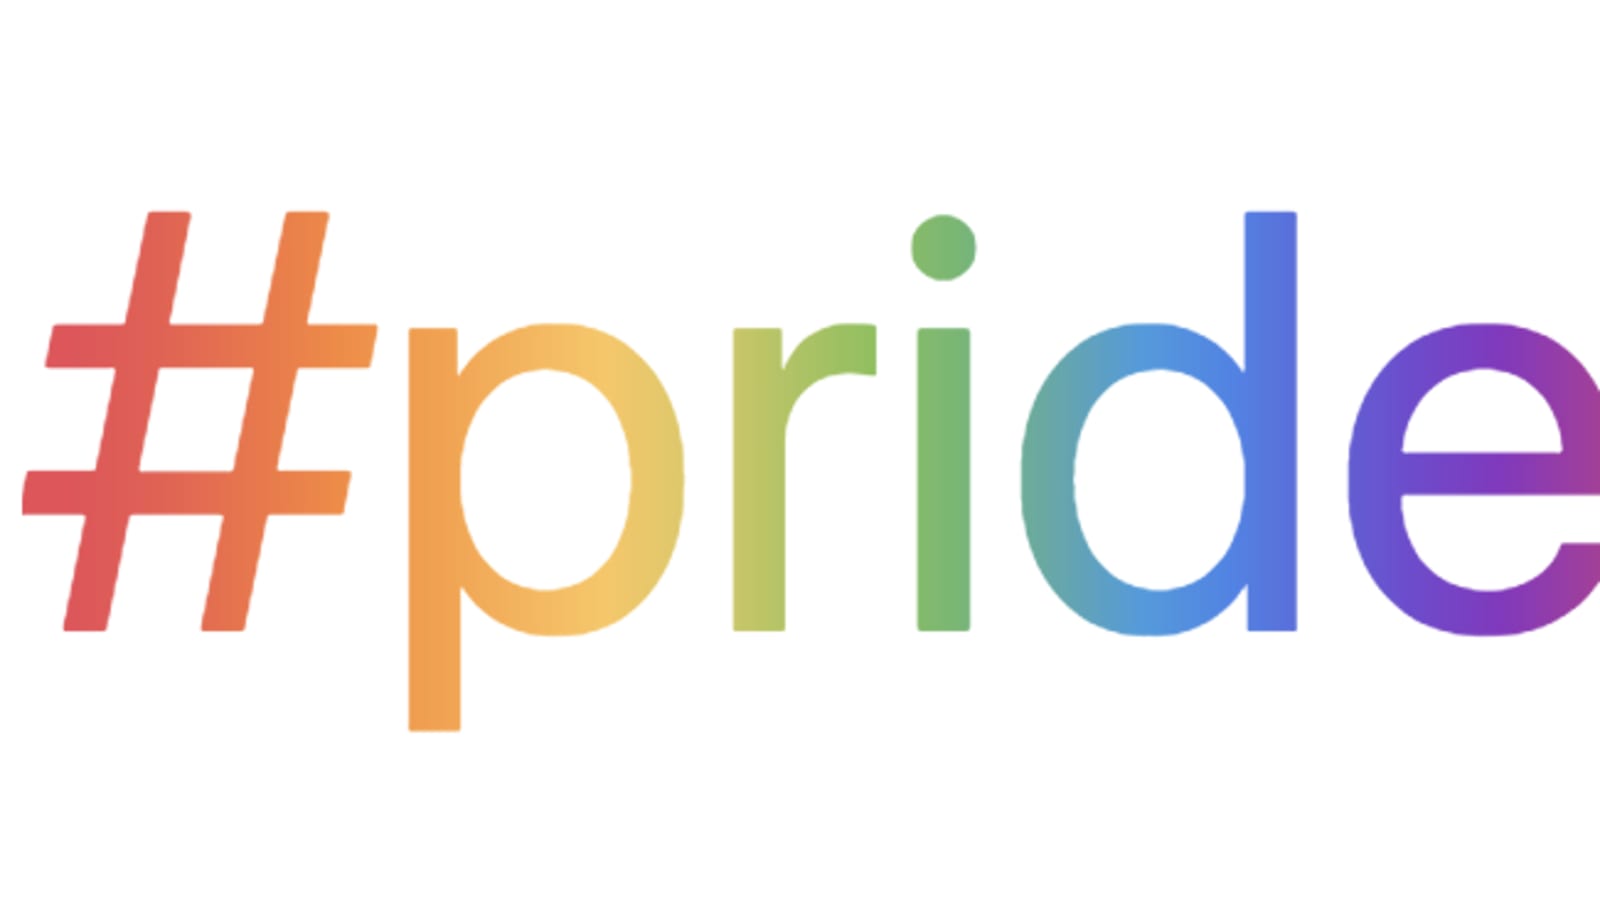 Instagram #pride rainbow tag - how did they do it? - DEV Community